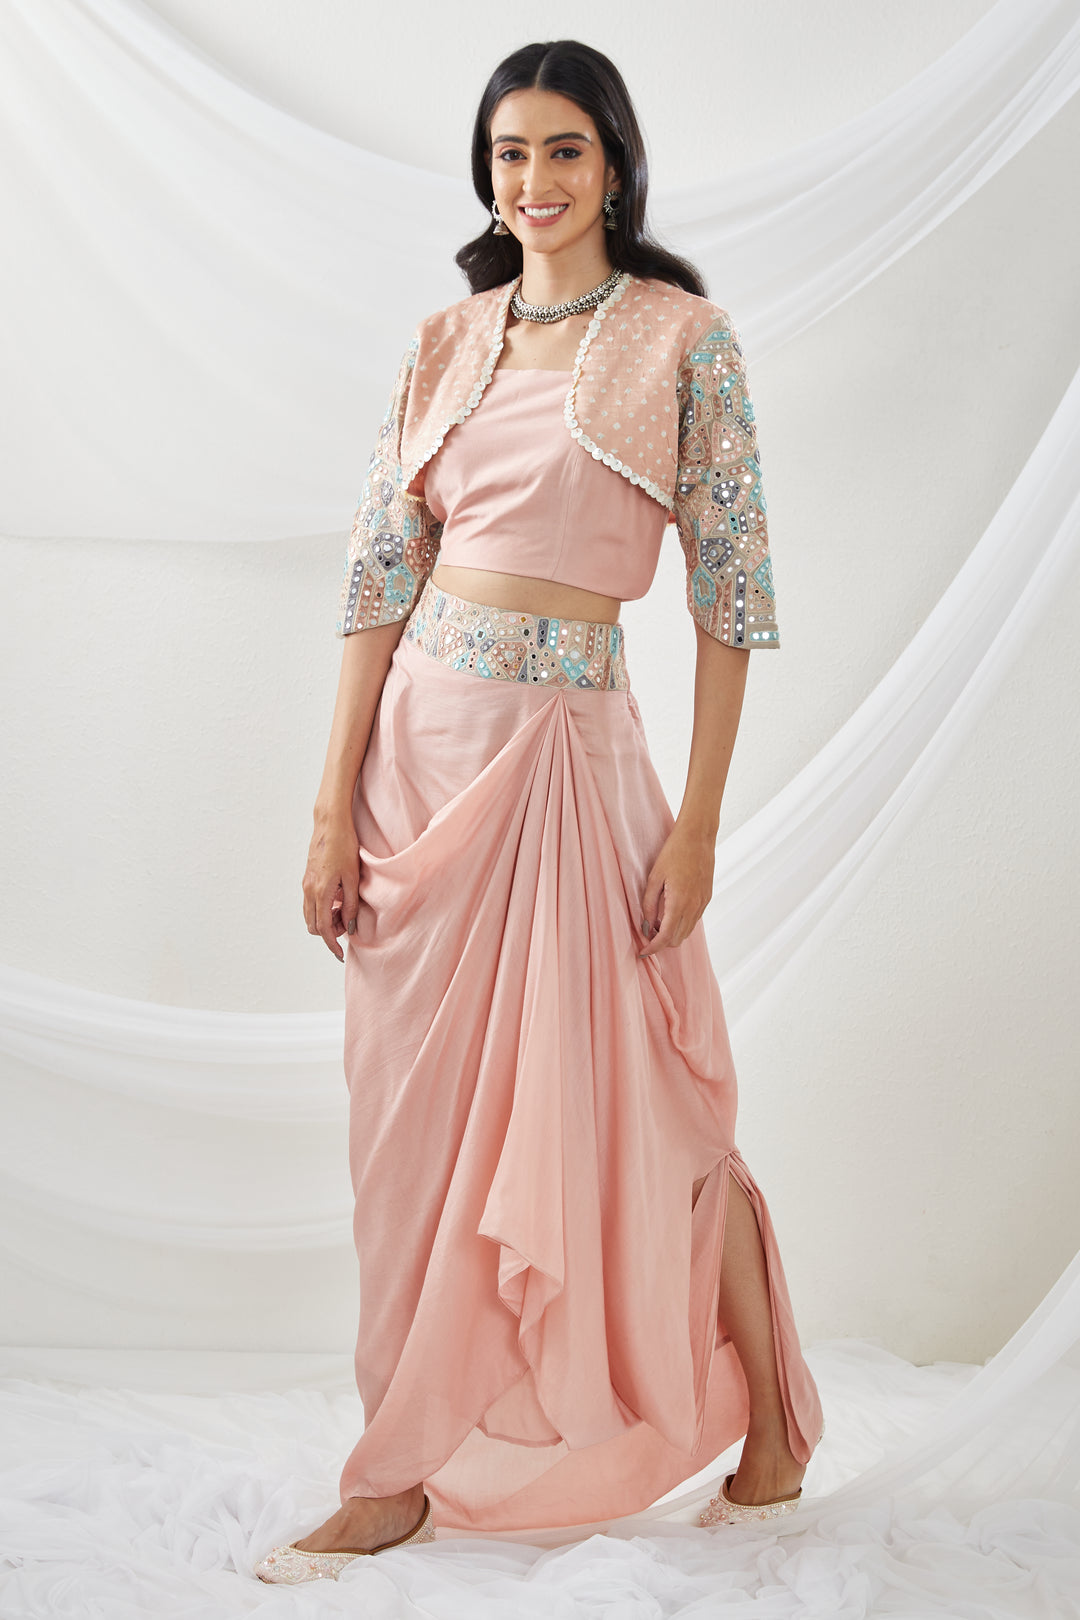 Rabari Embroidered Skirt